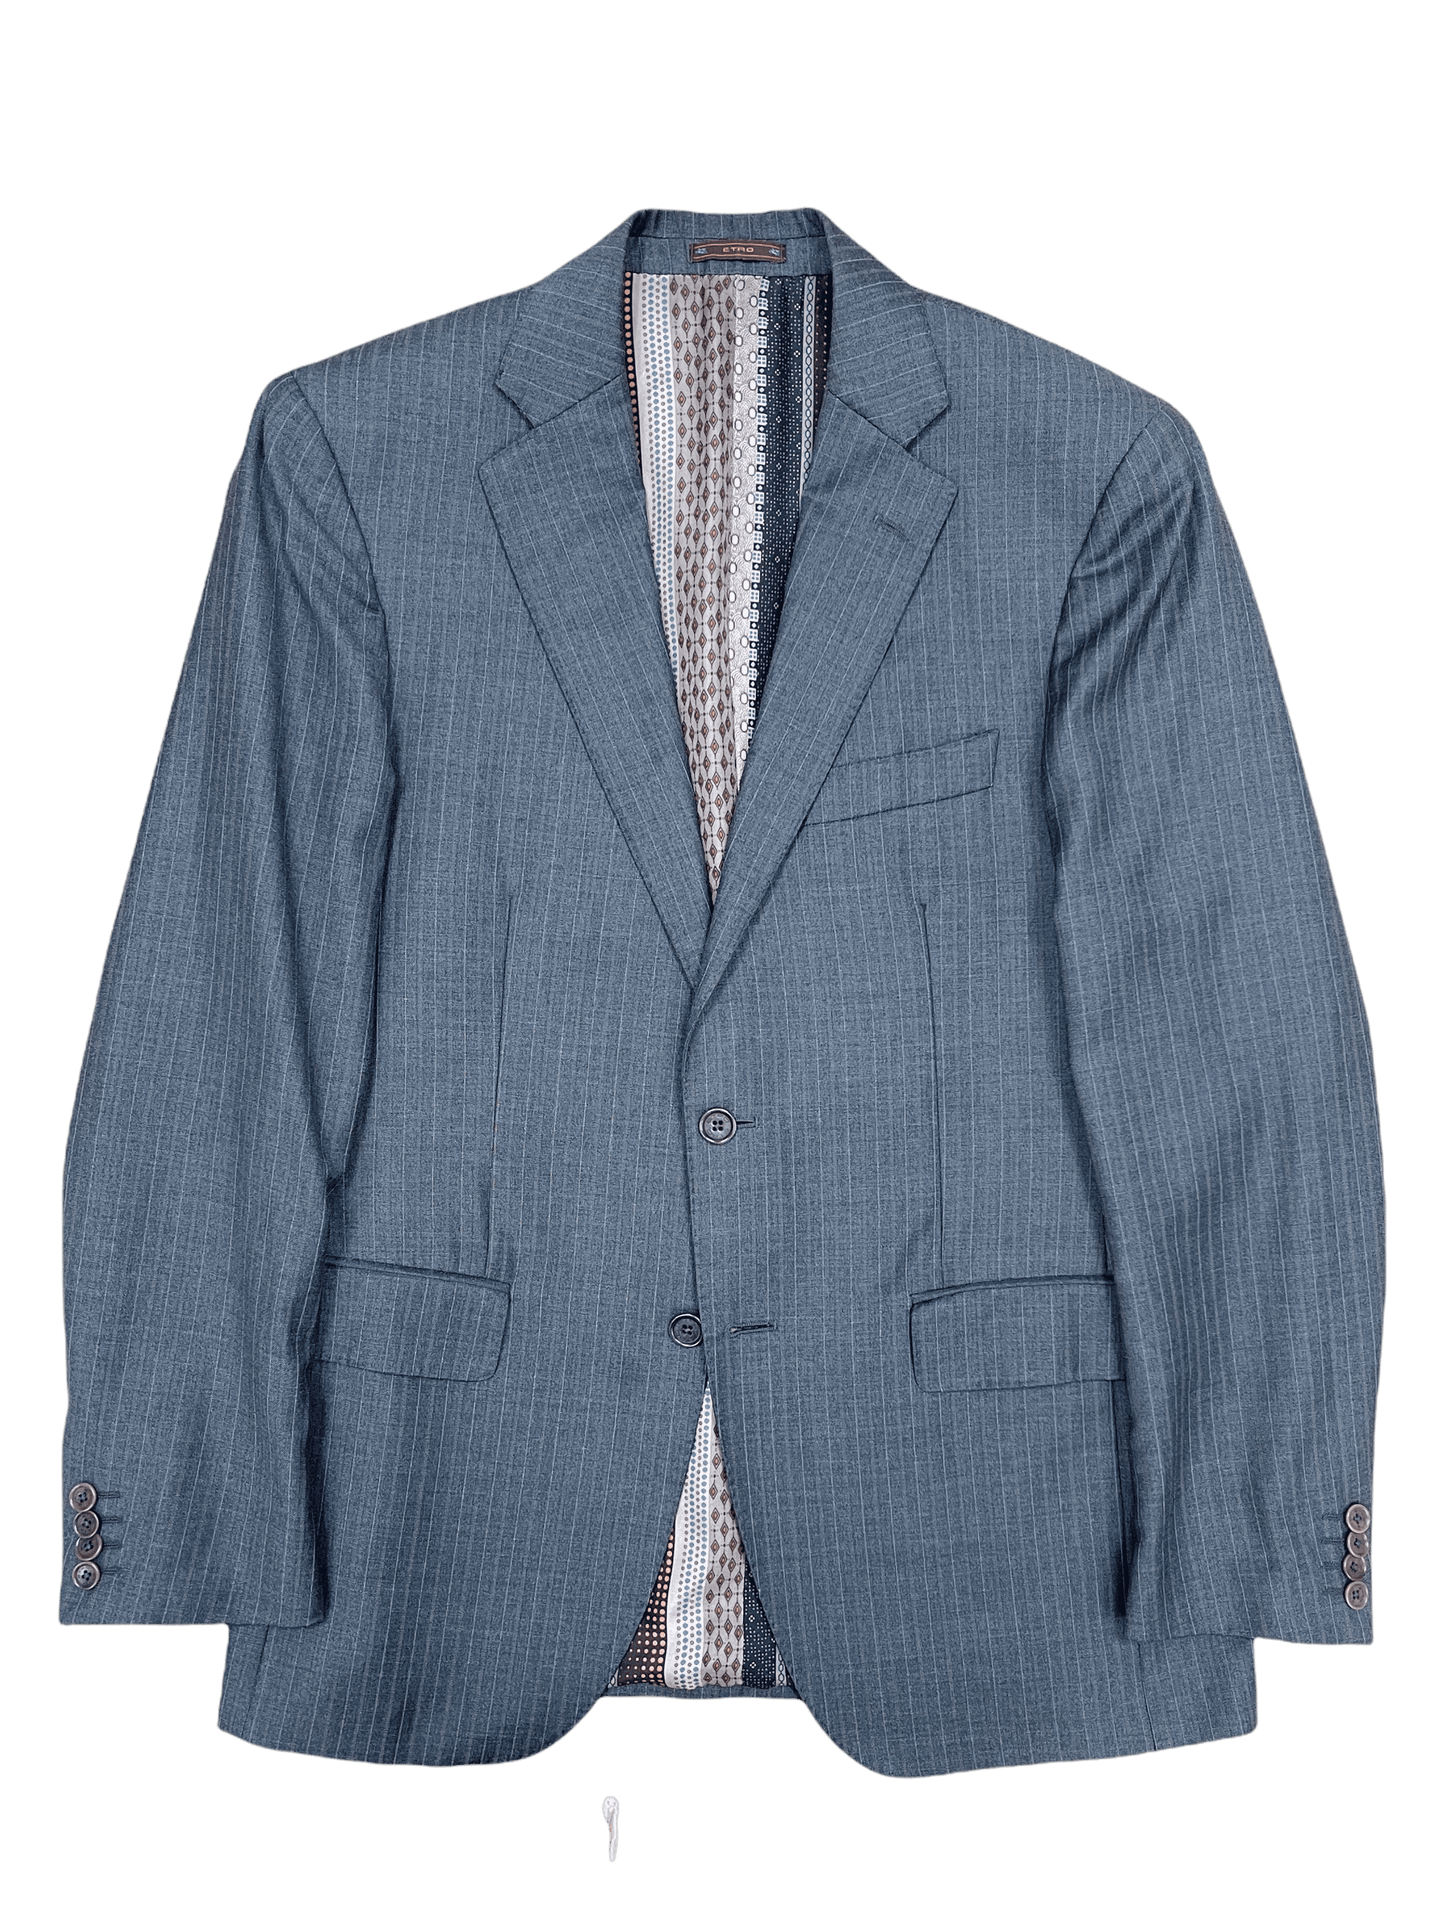 Etro Milano Charcoal Tonal Striped Suit 40R